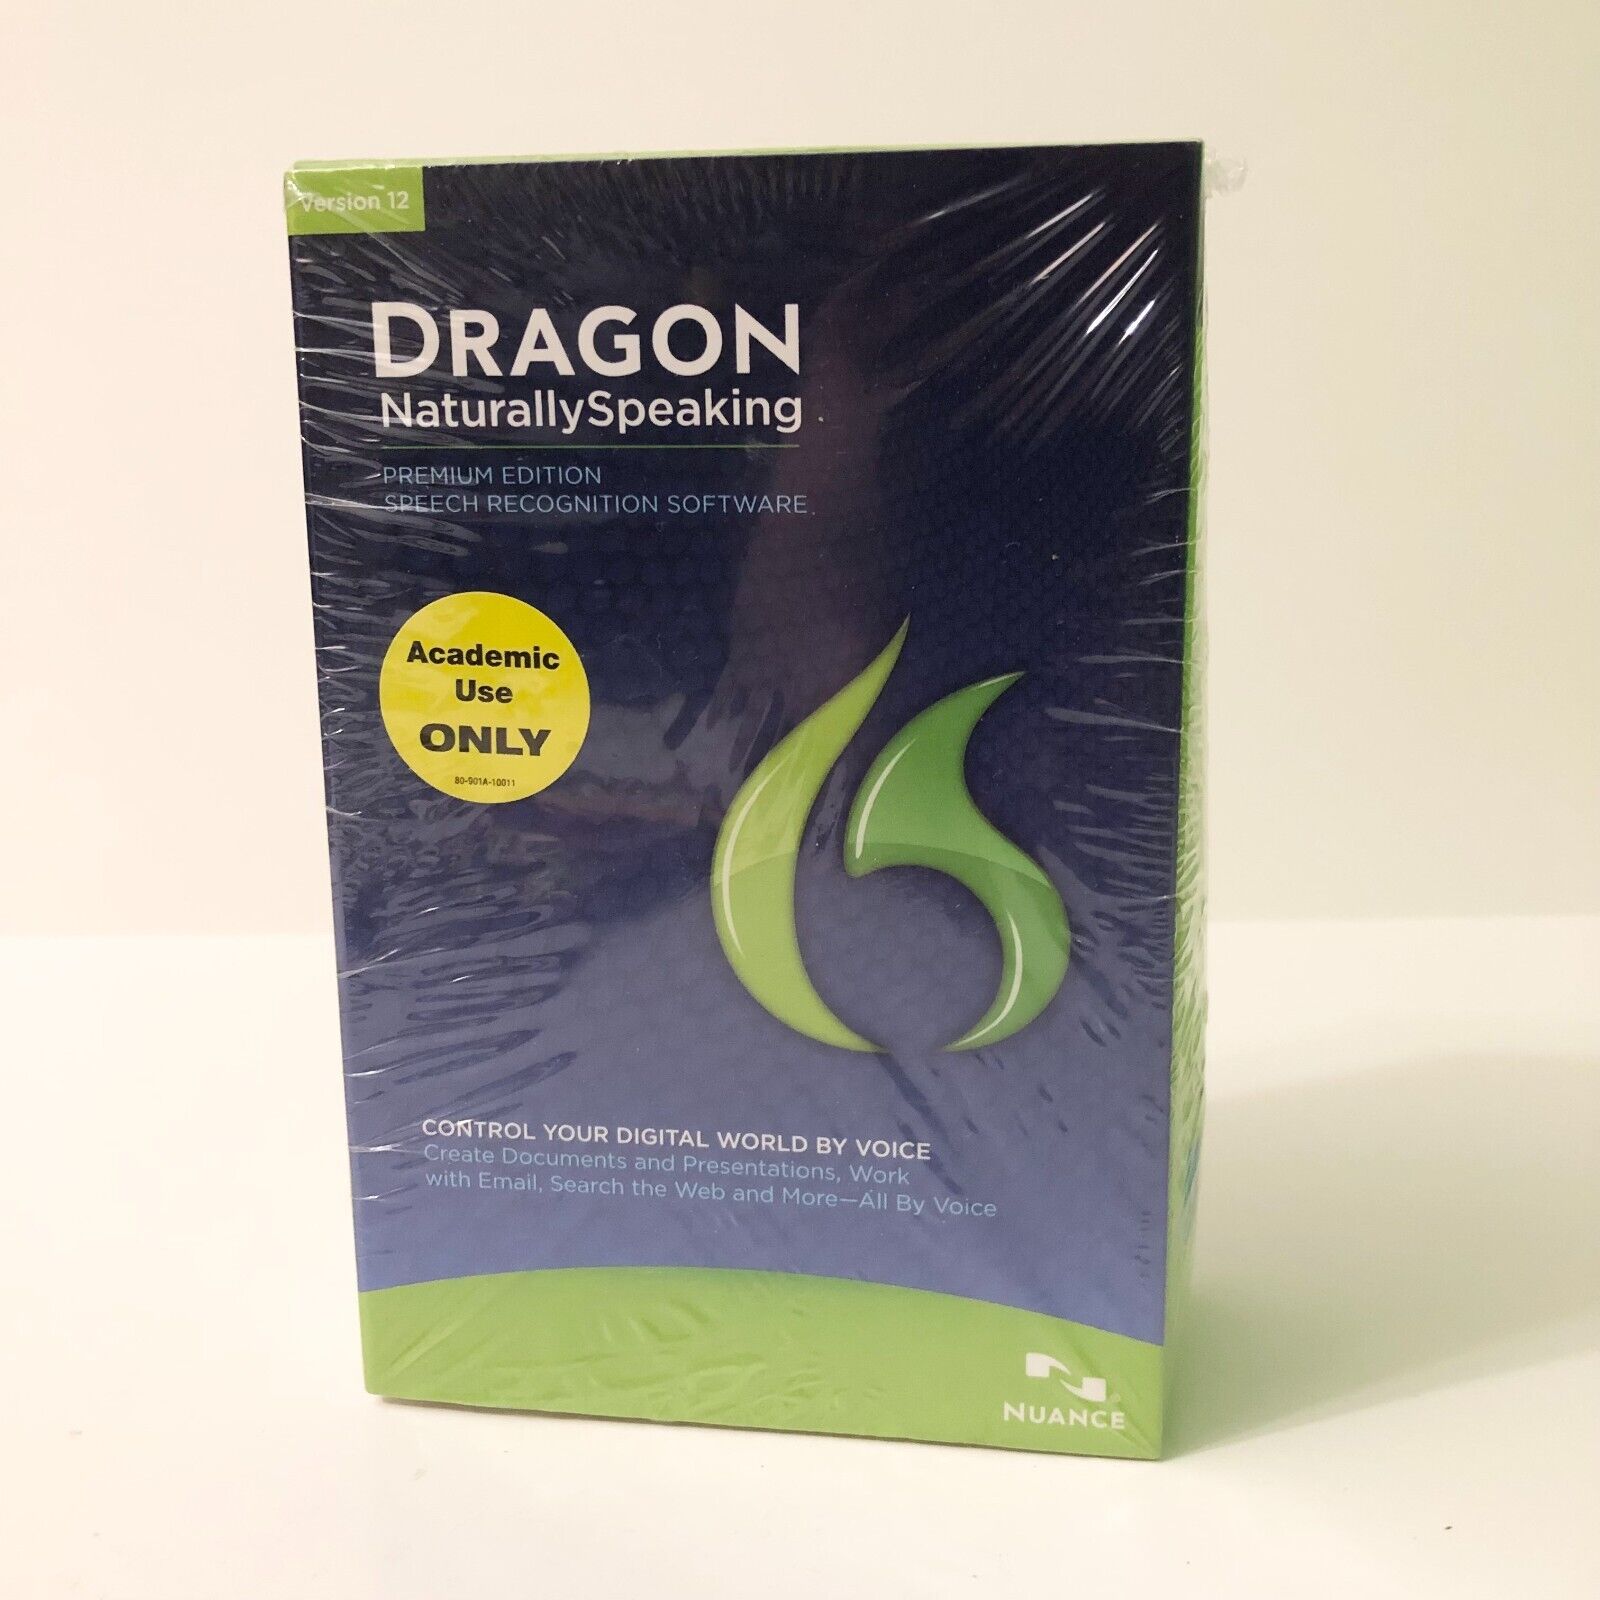 Dragon Naturally Speaking Version 12 Premium Edition Software